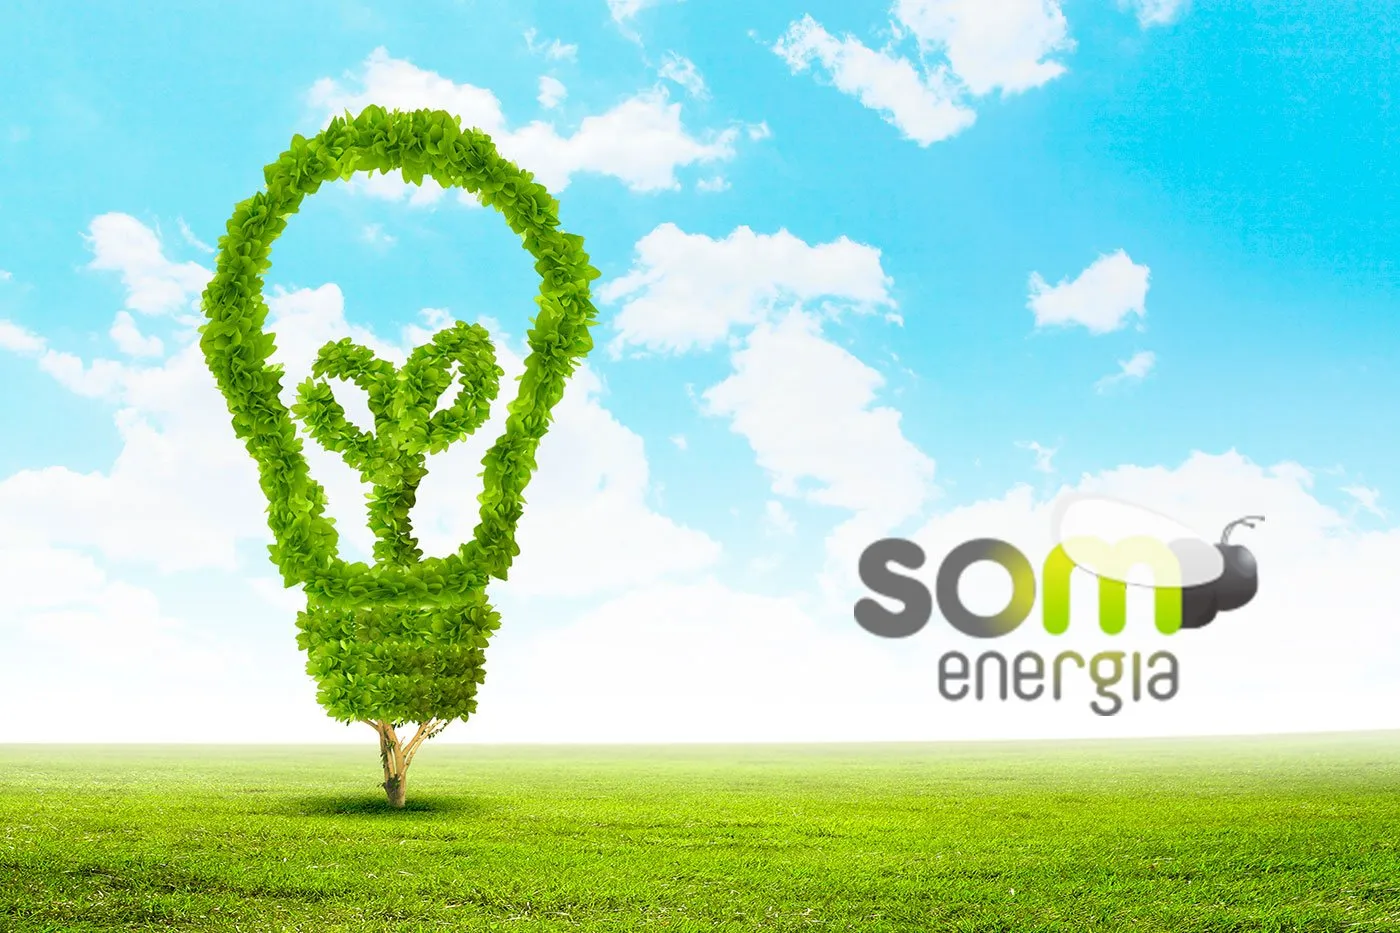  Energía eléctrica 100% verde